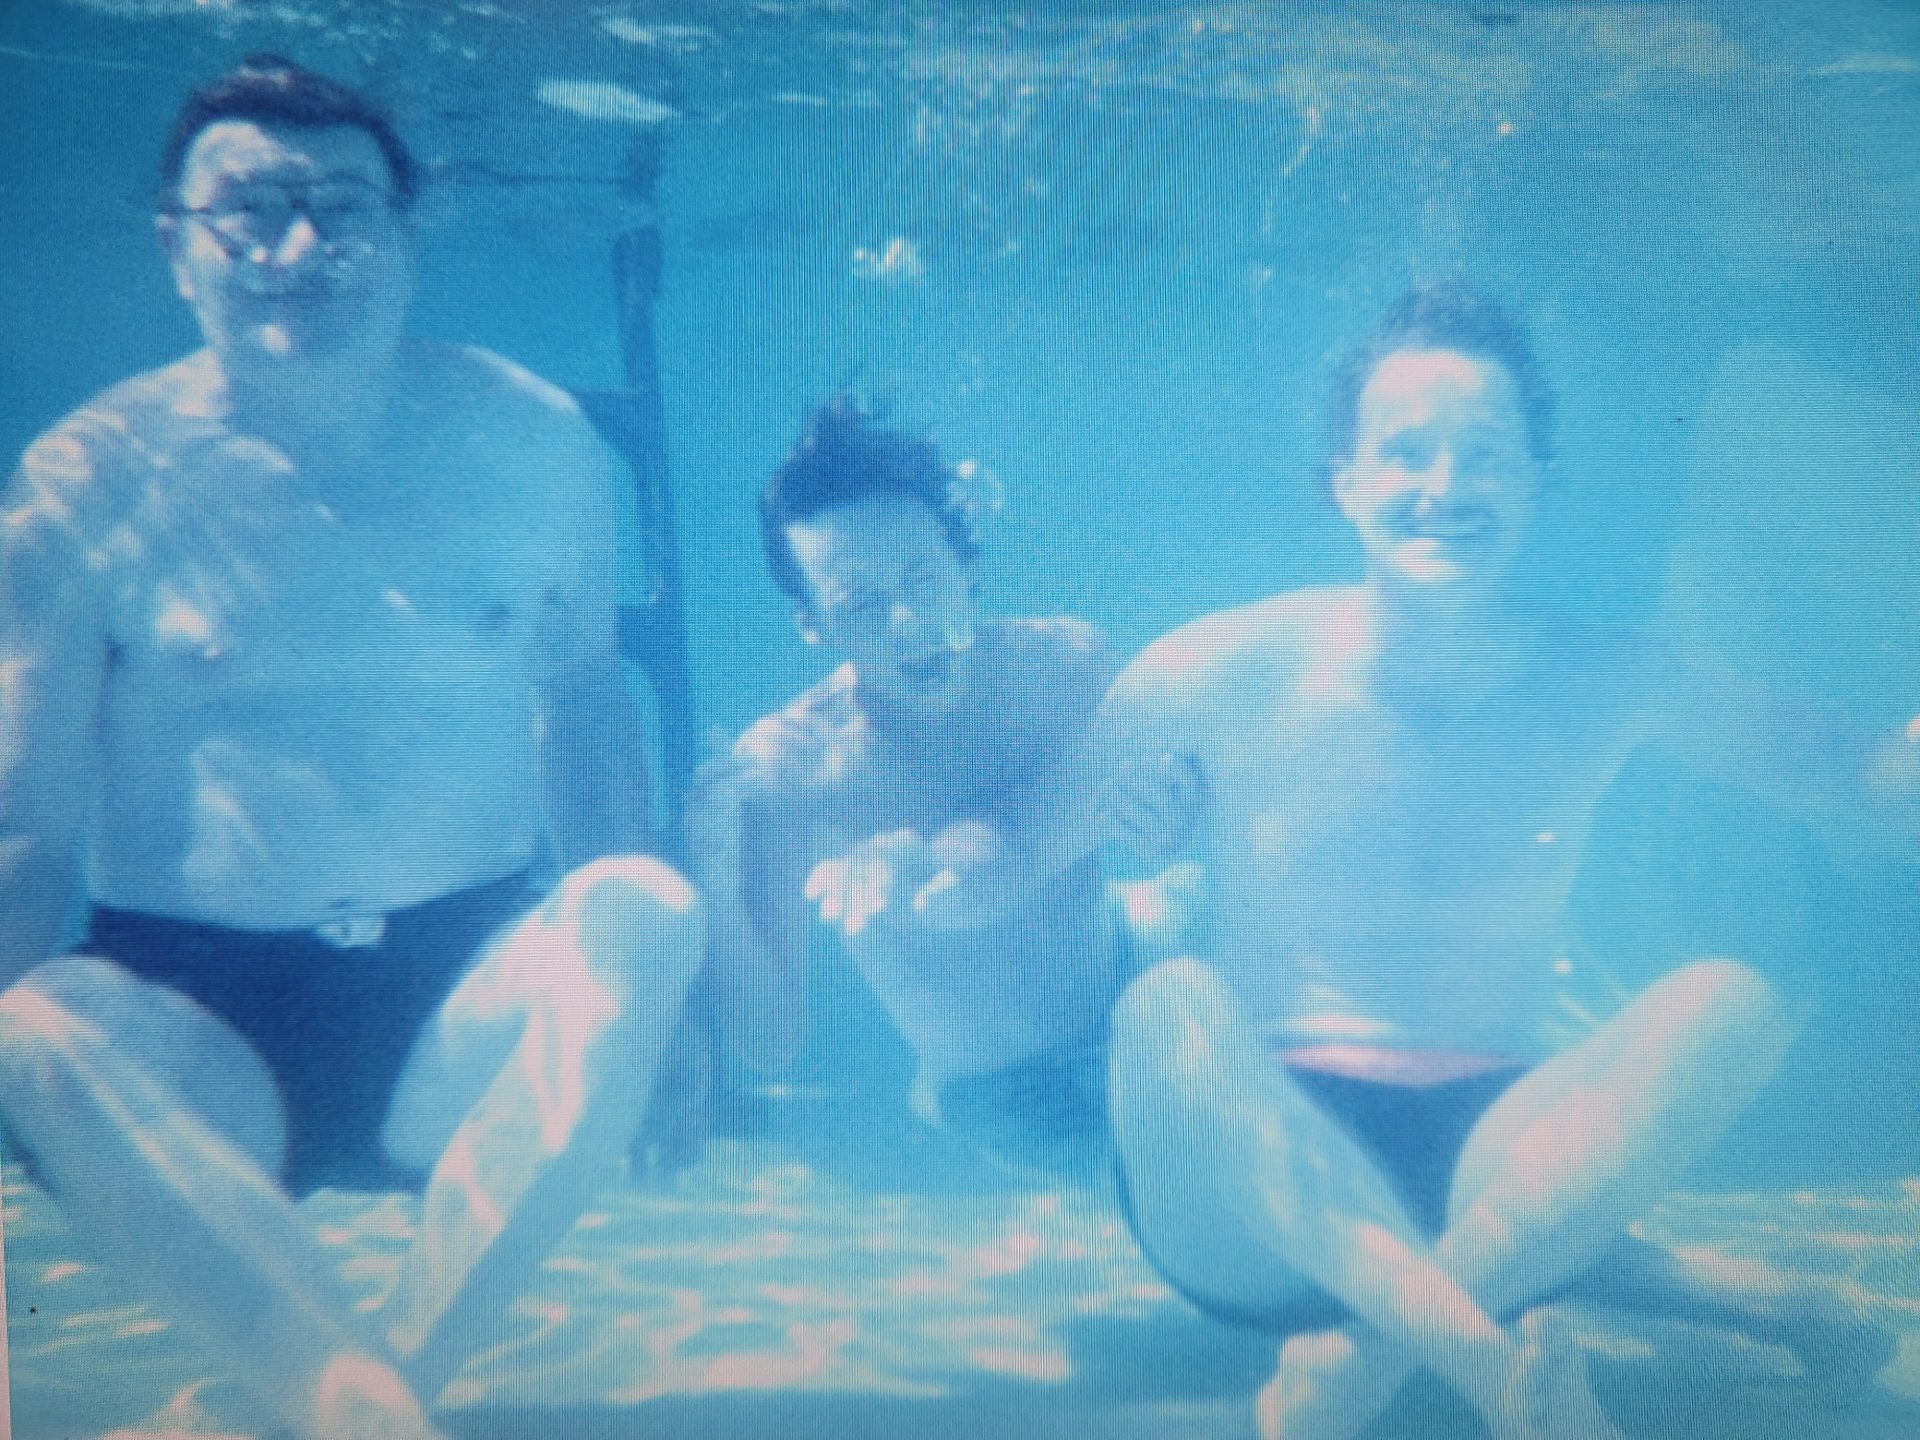 grandad Joe, Steven and Joe about 1988. Full on fun in the backyard pool.